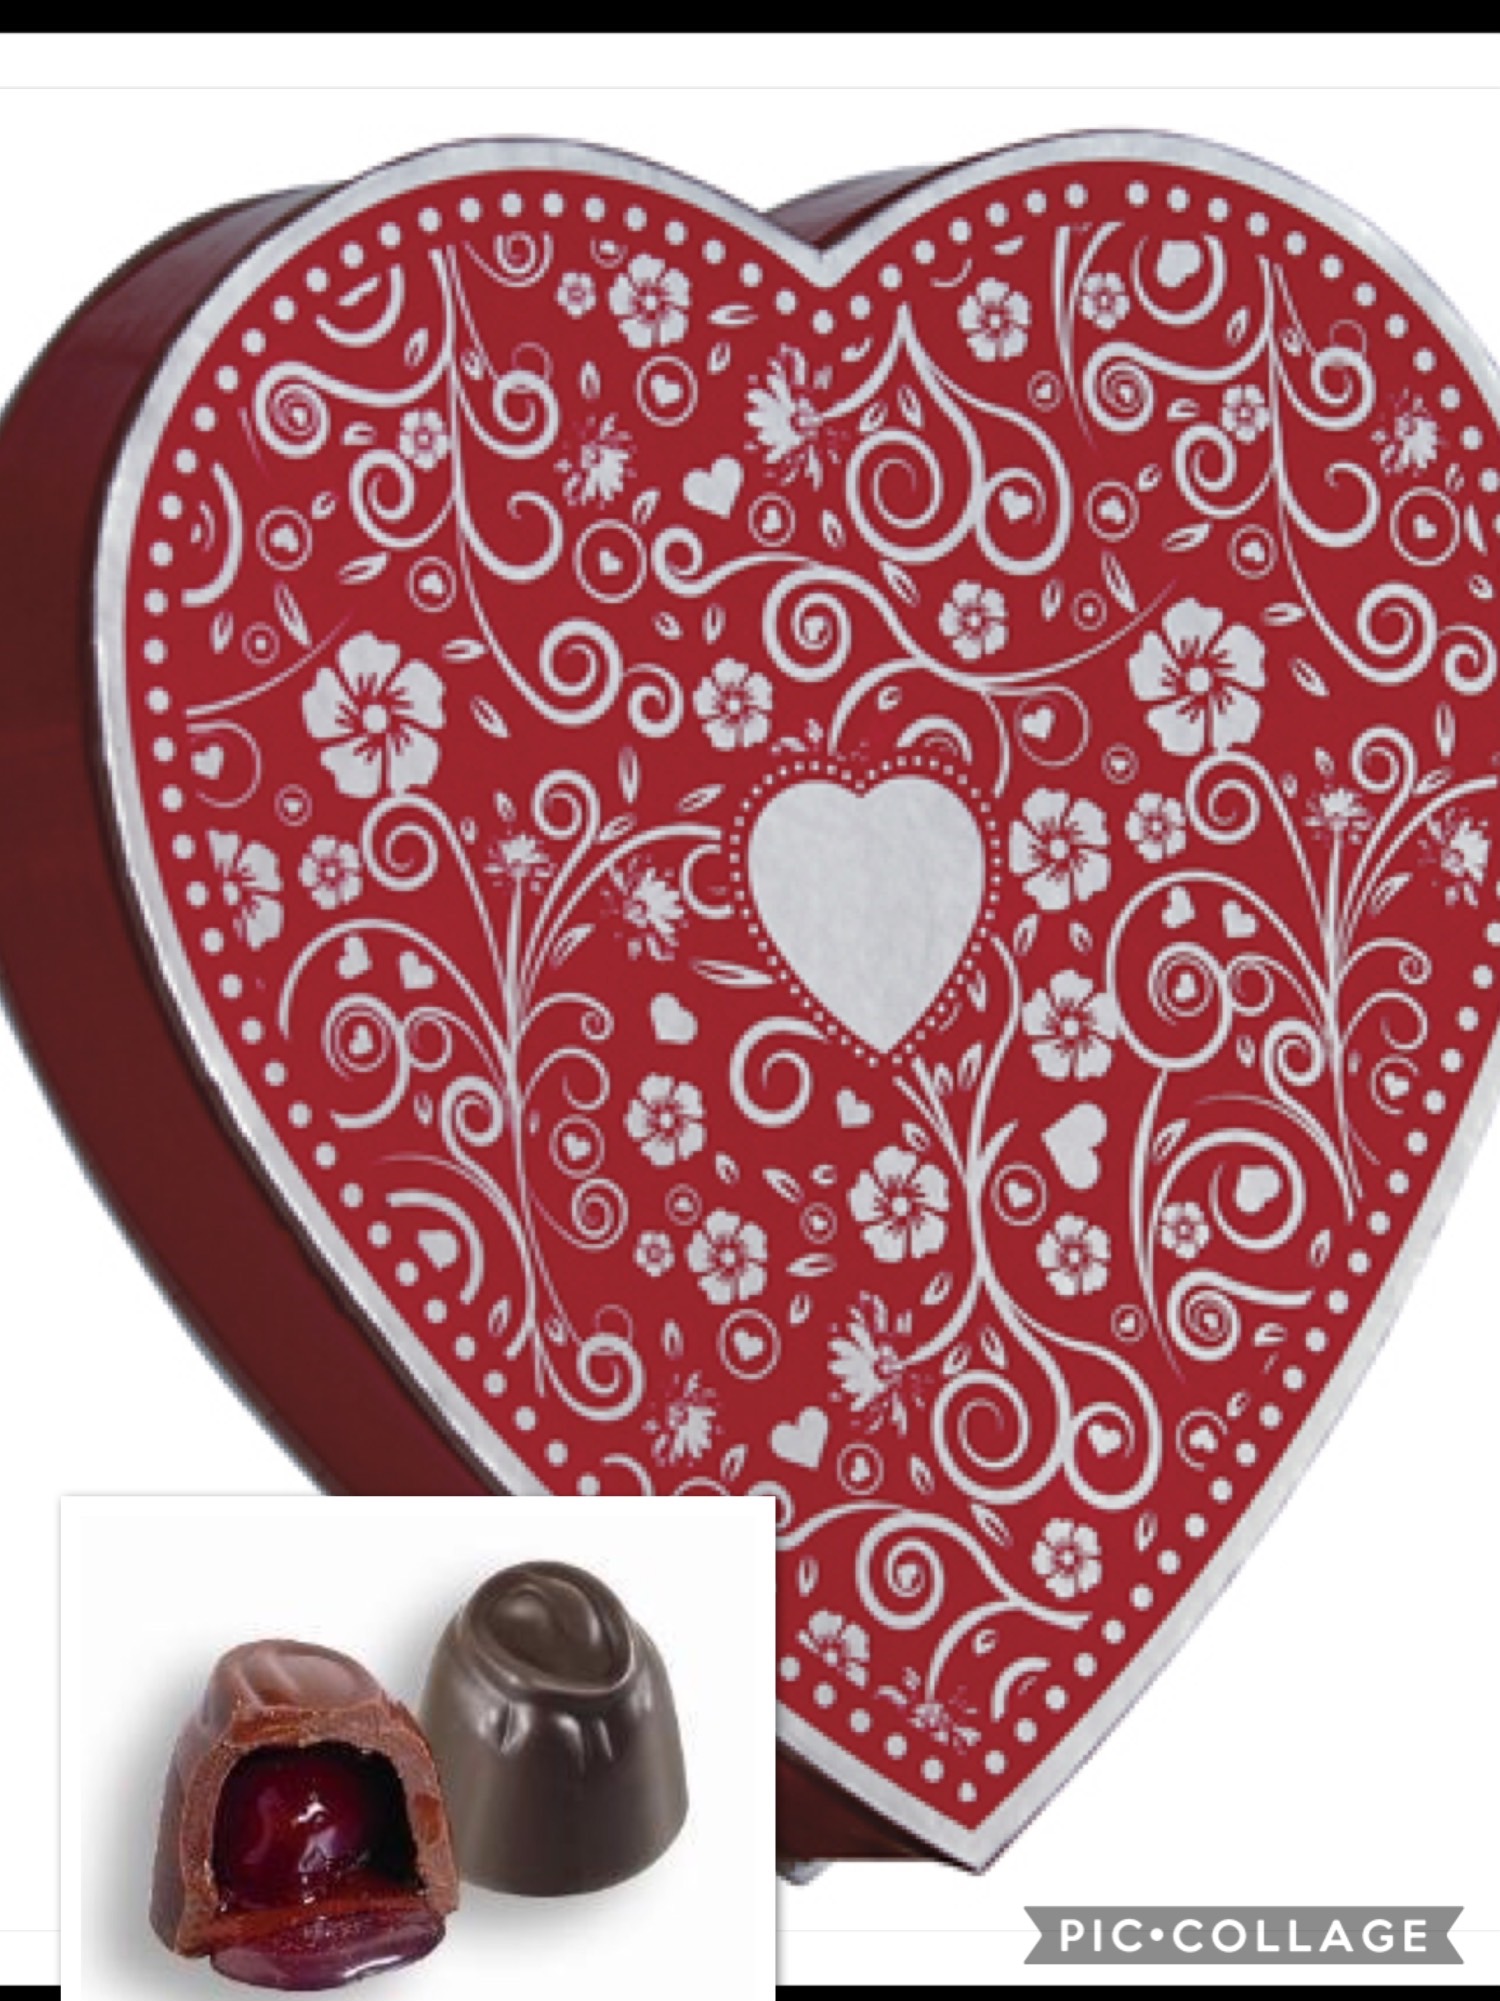 I Love You Heart - 1/2 pound box of Milk & Dark Chocolate Cordial Cherries Sugar Free